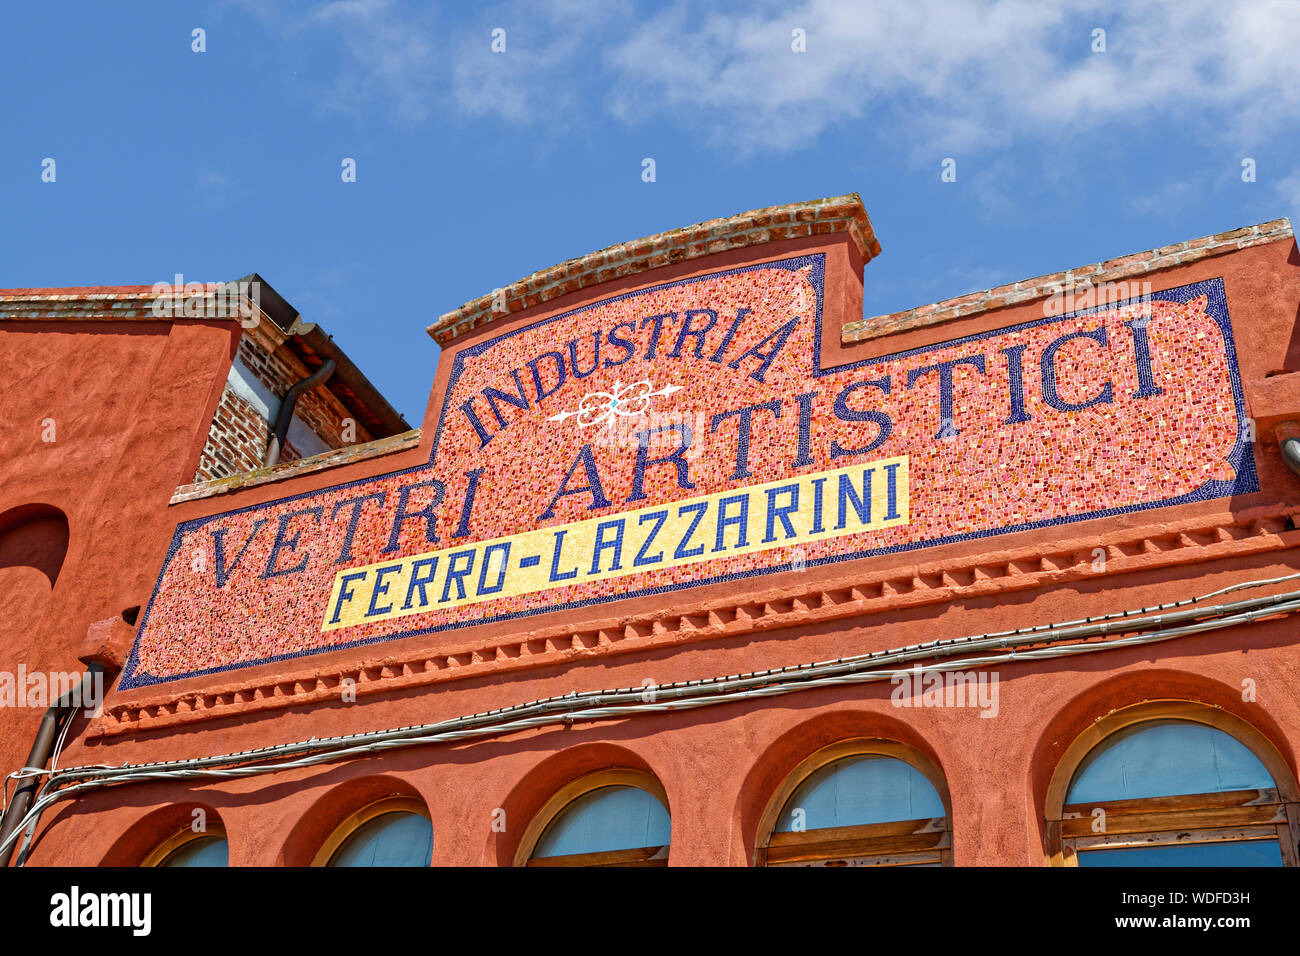 Facade of the Ferro-Lazzarini glass works on Murano Island in the Venetian Lagoon, Venice, Italy. Stock Photo